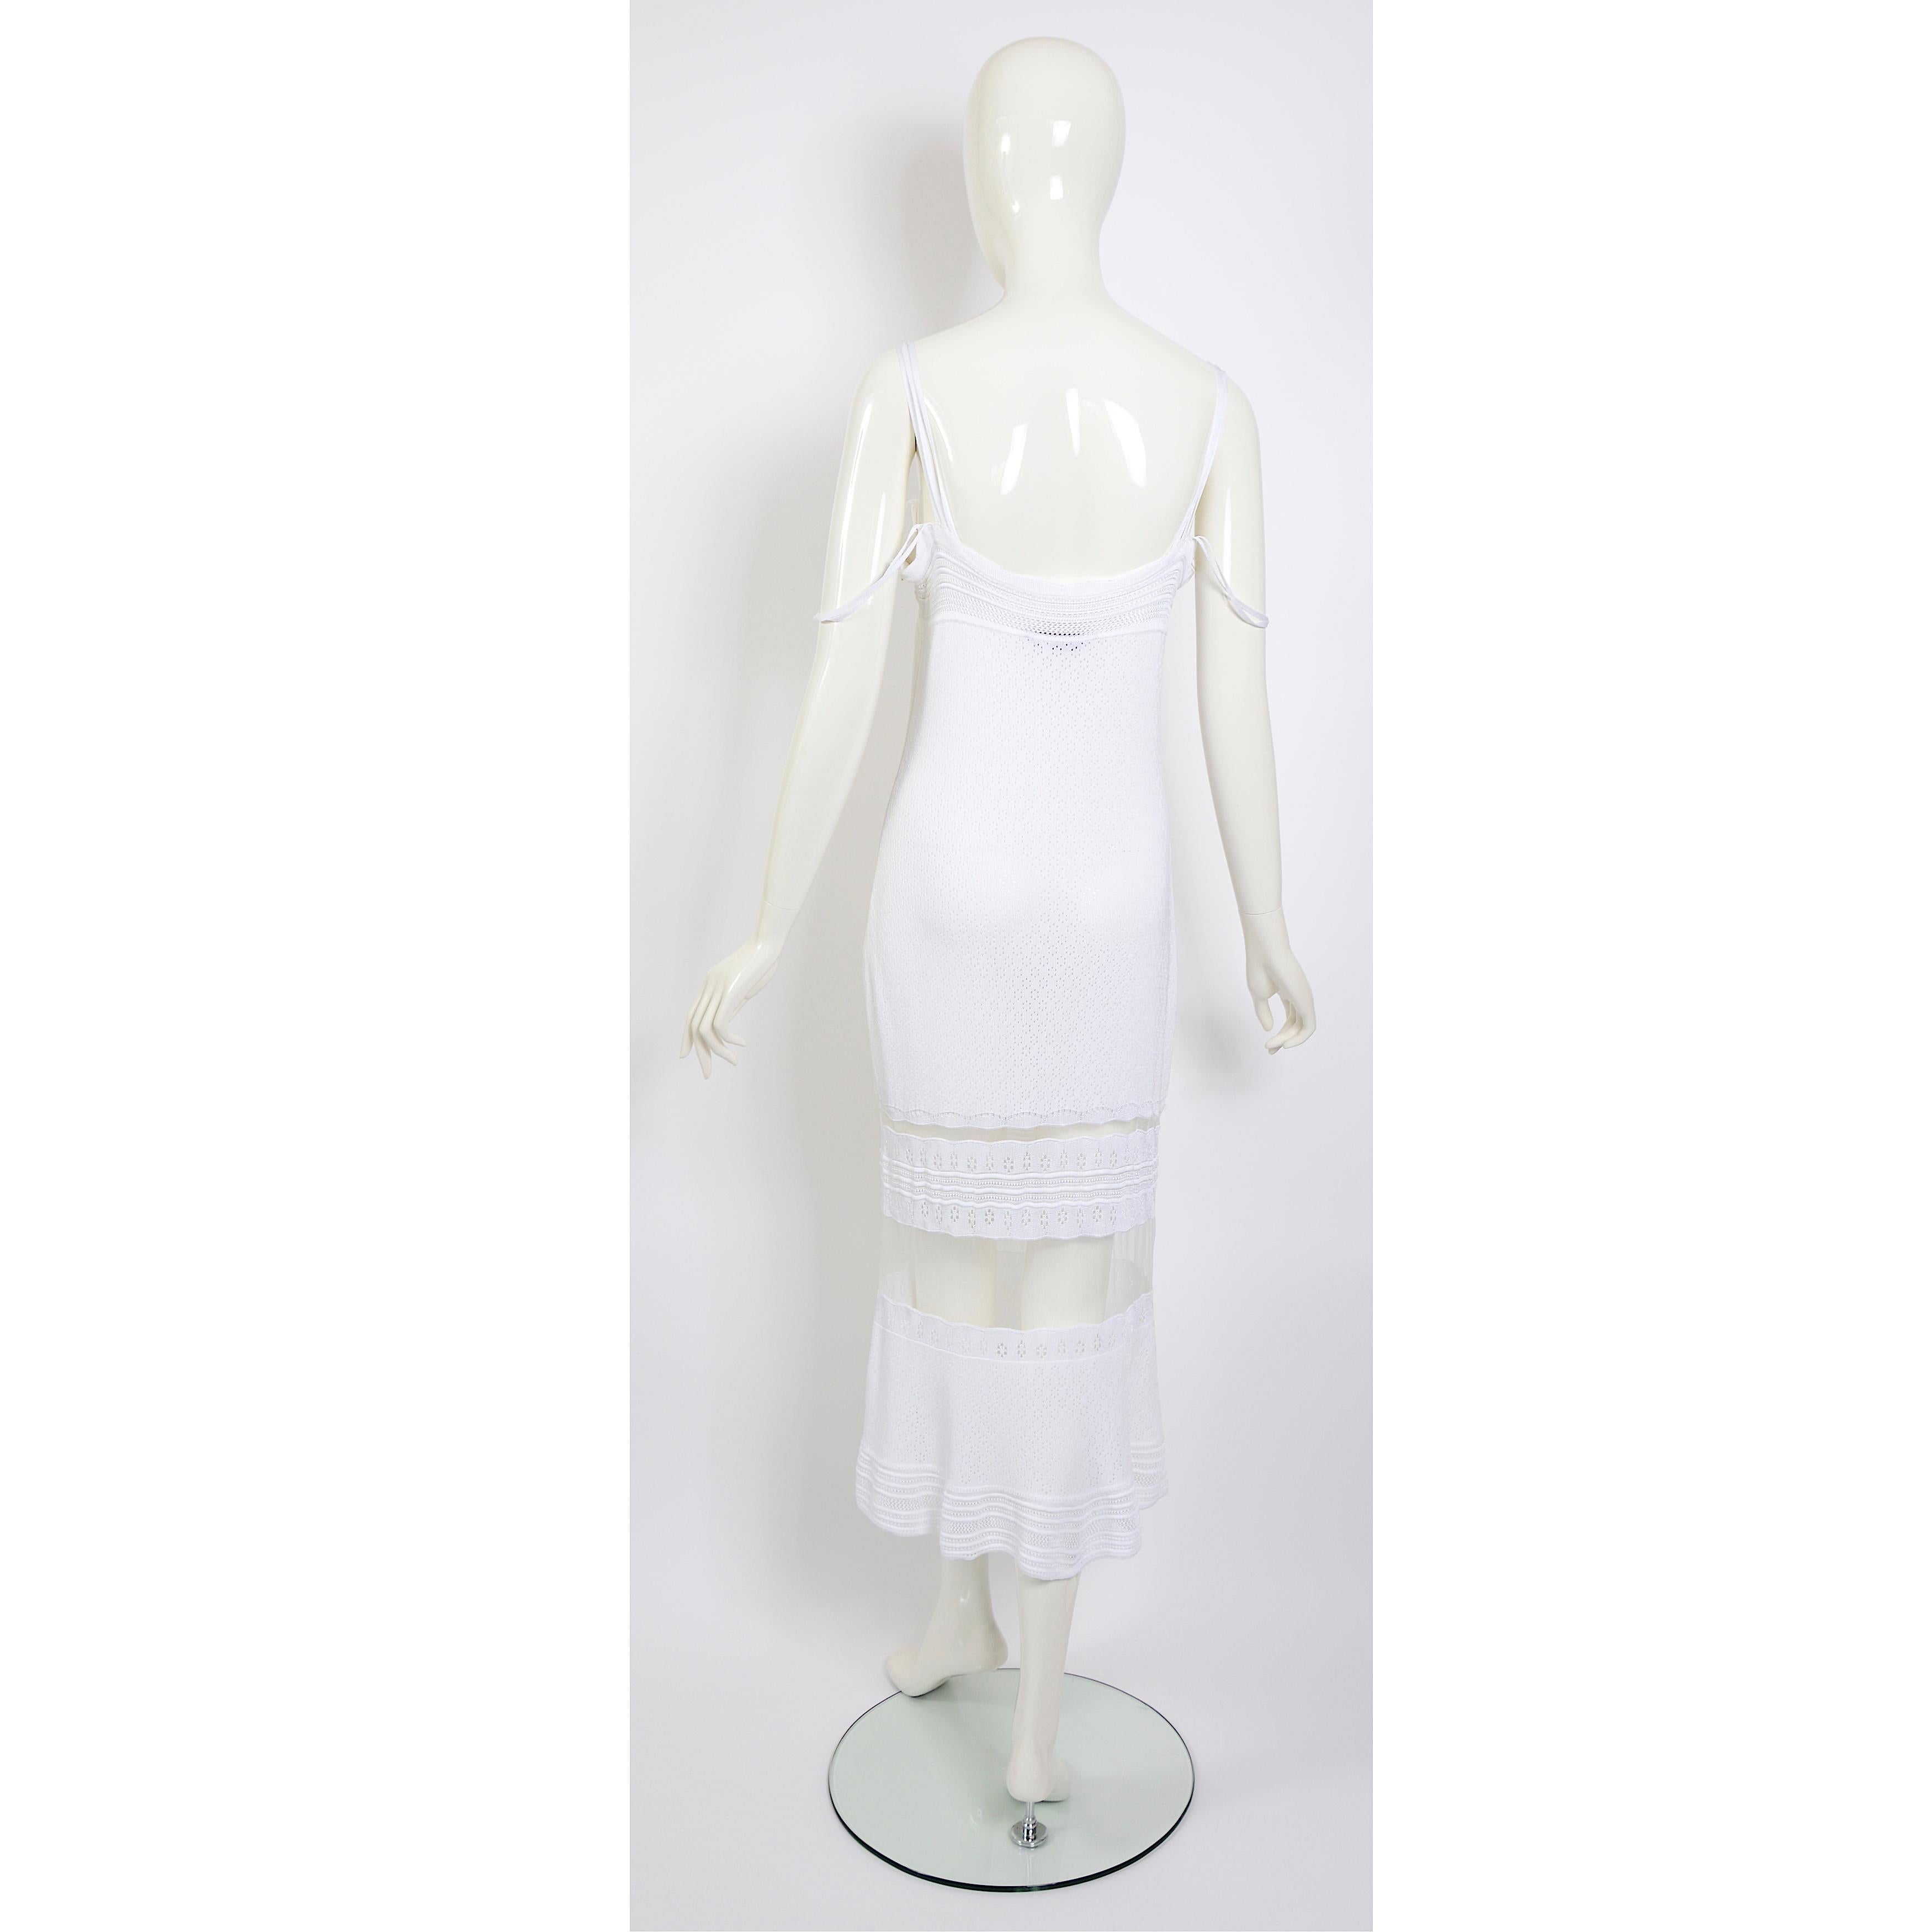  John Galliano S/S 1998 vintage white knit & mesh wedding or evening dress  5